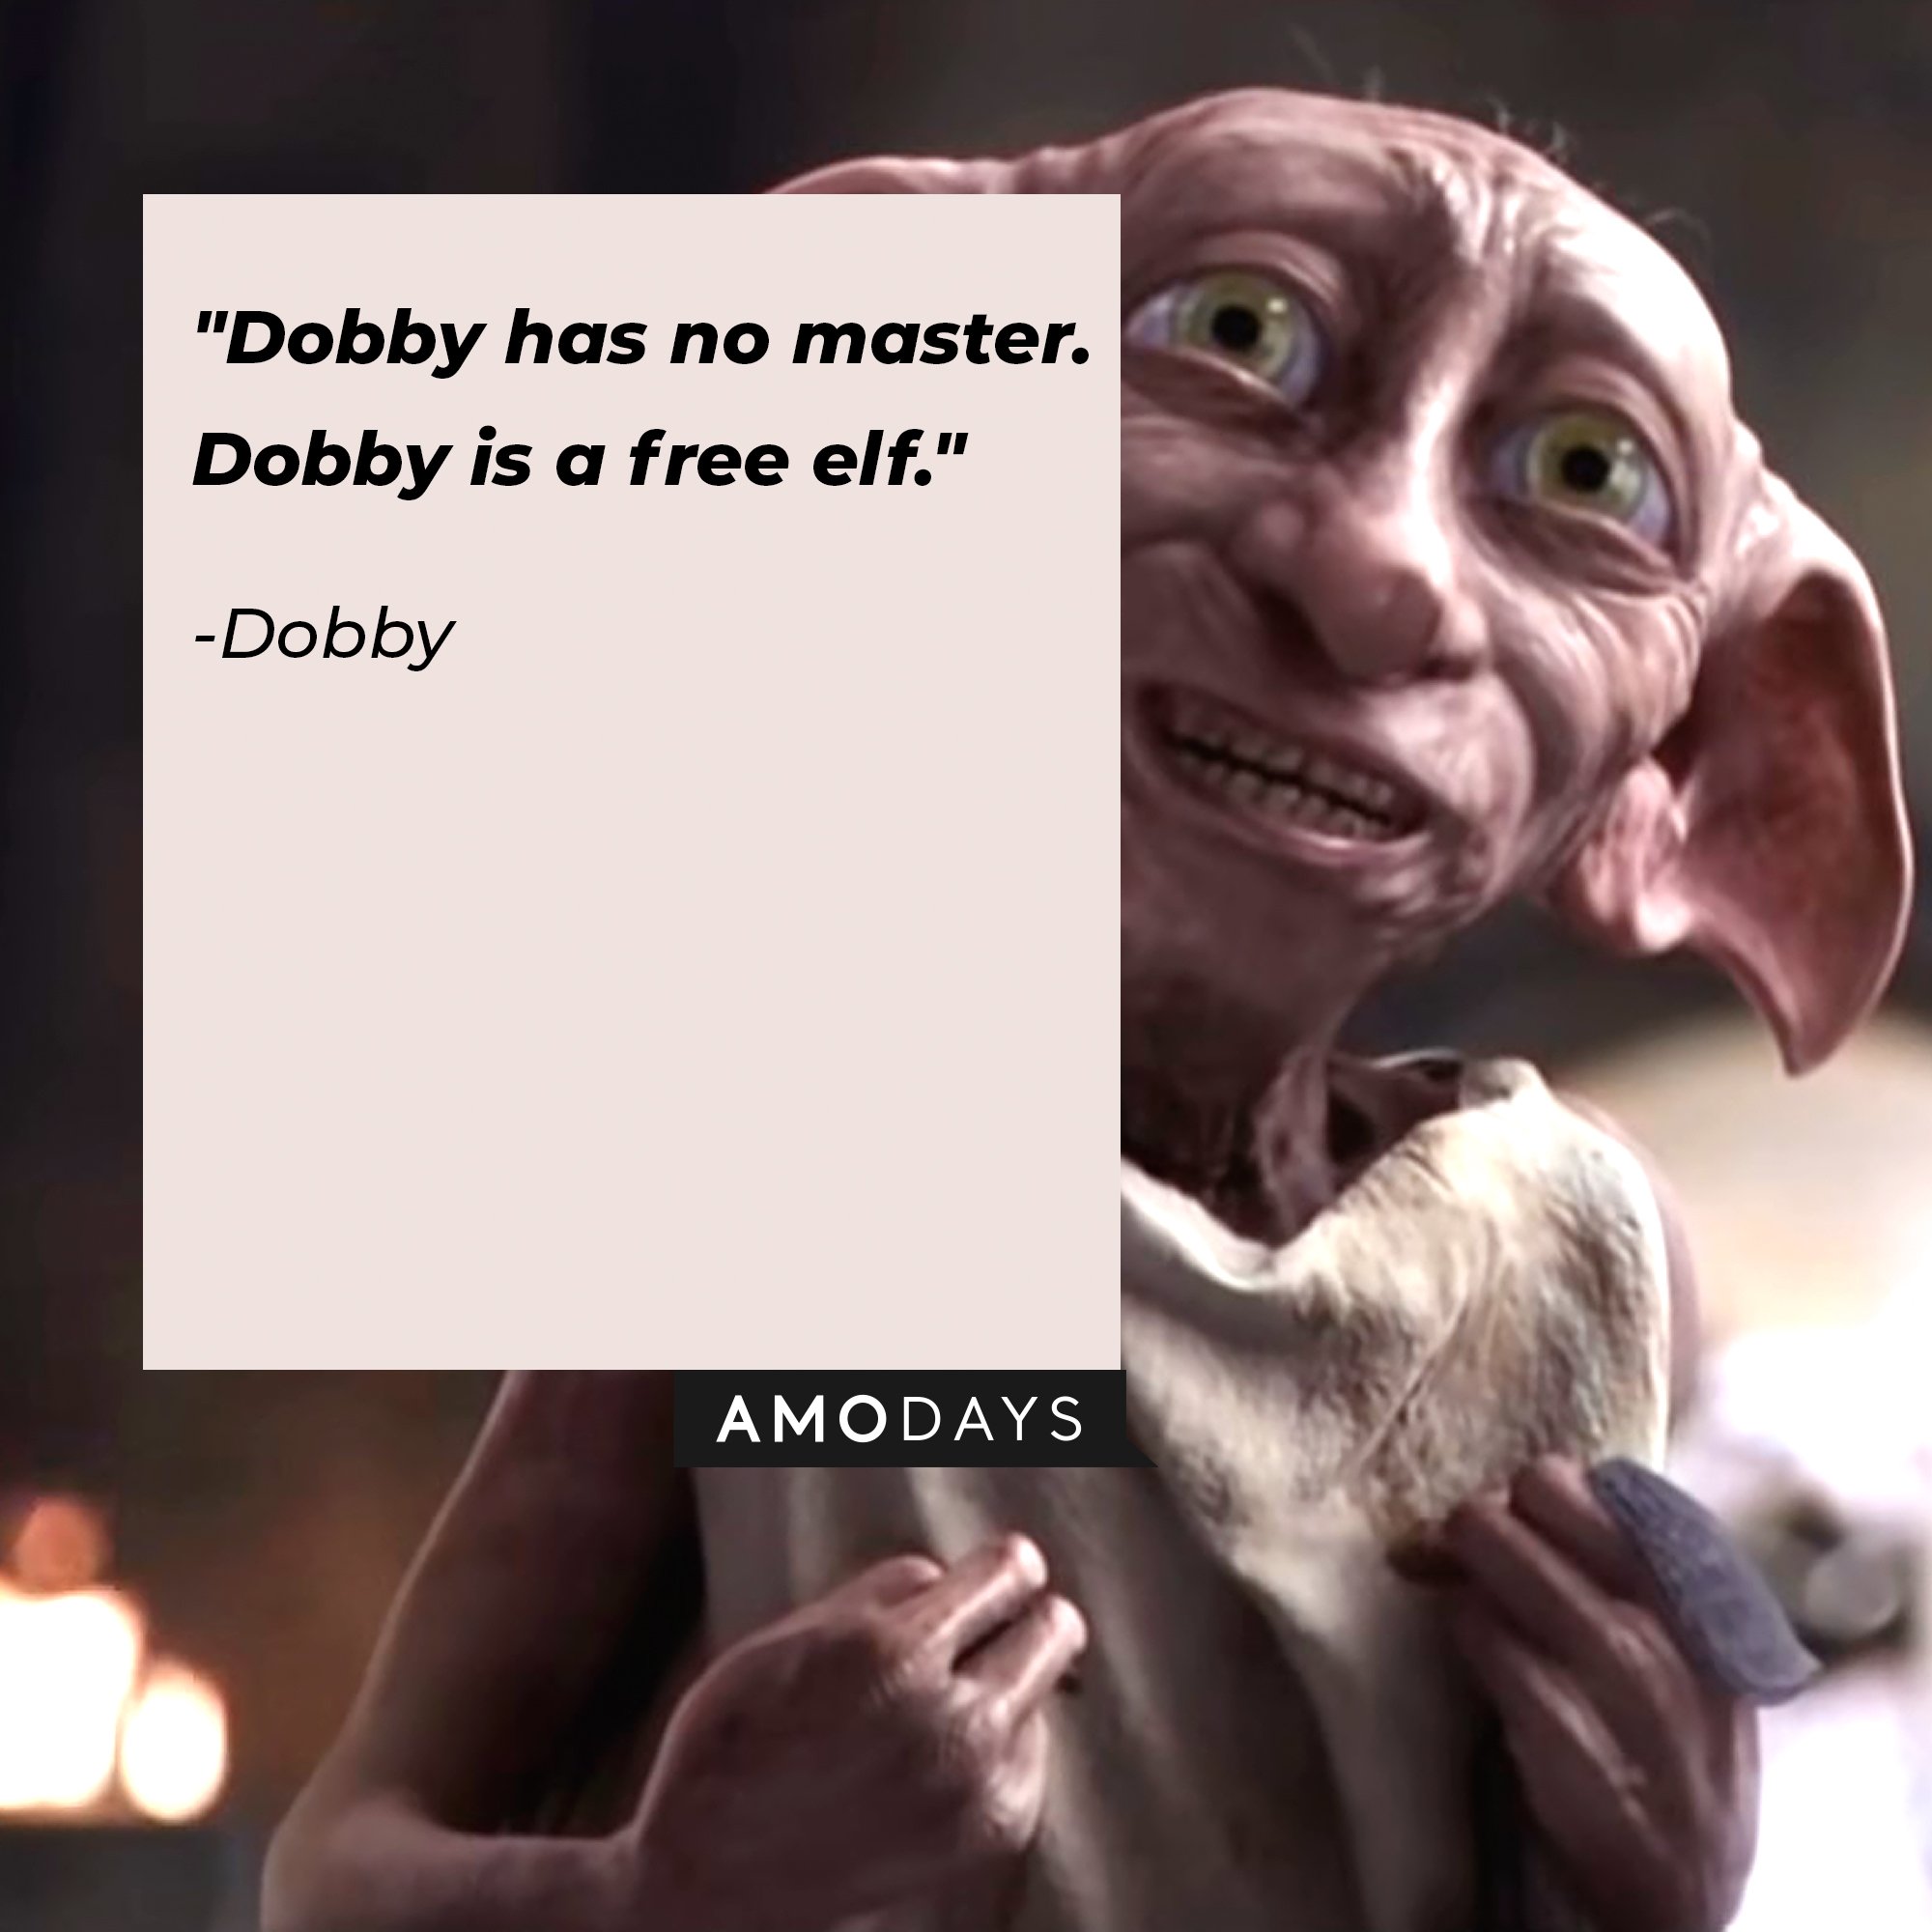 Dobby’s quote: "Dobby has no master. Dobby is a free elf." | Image: AmoDays